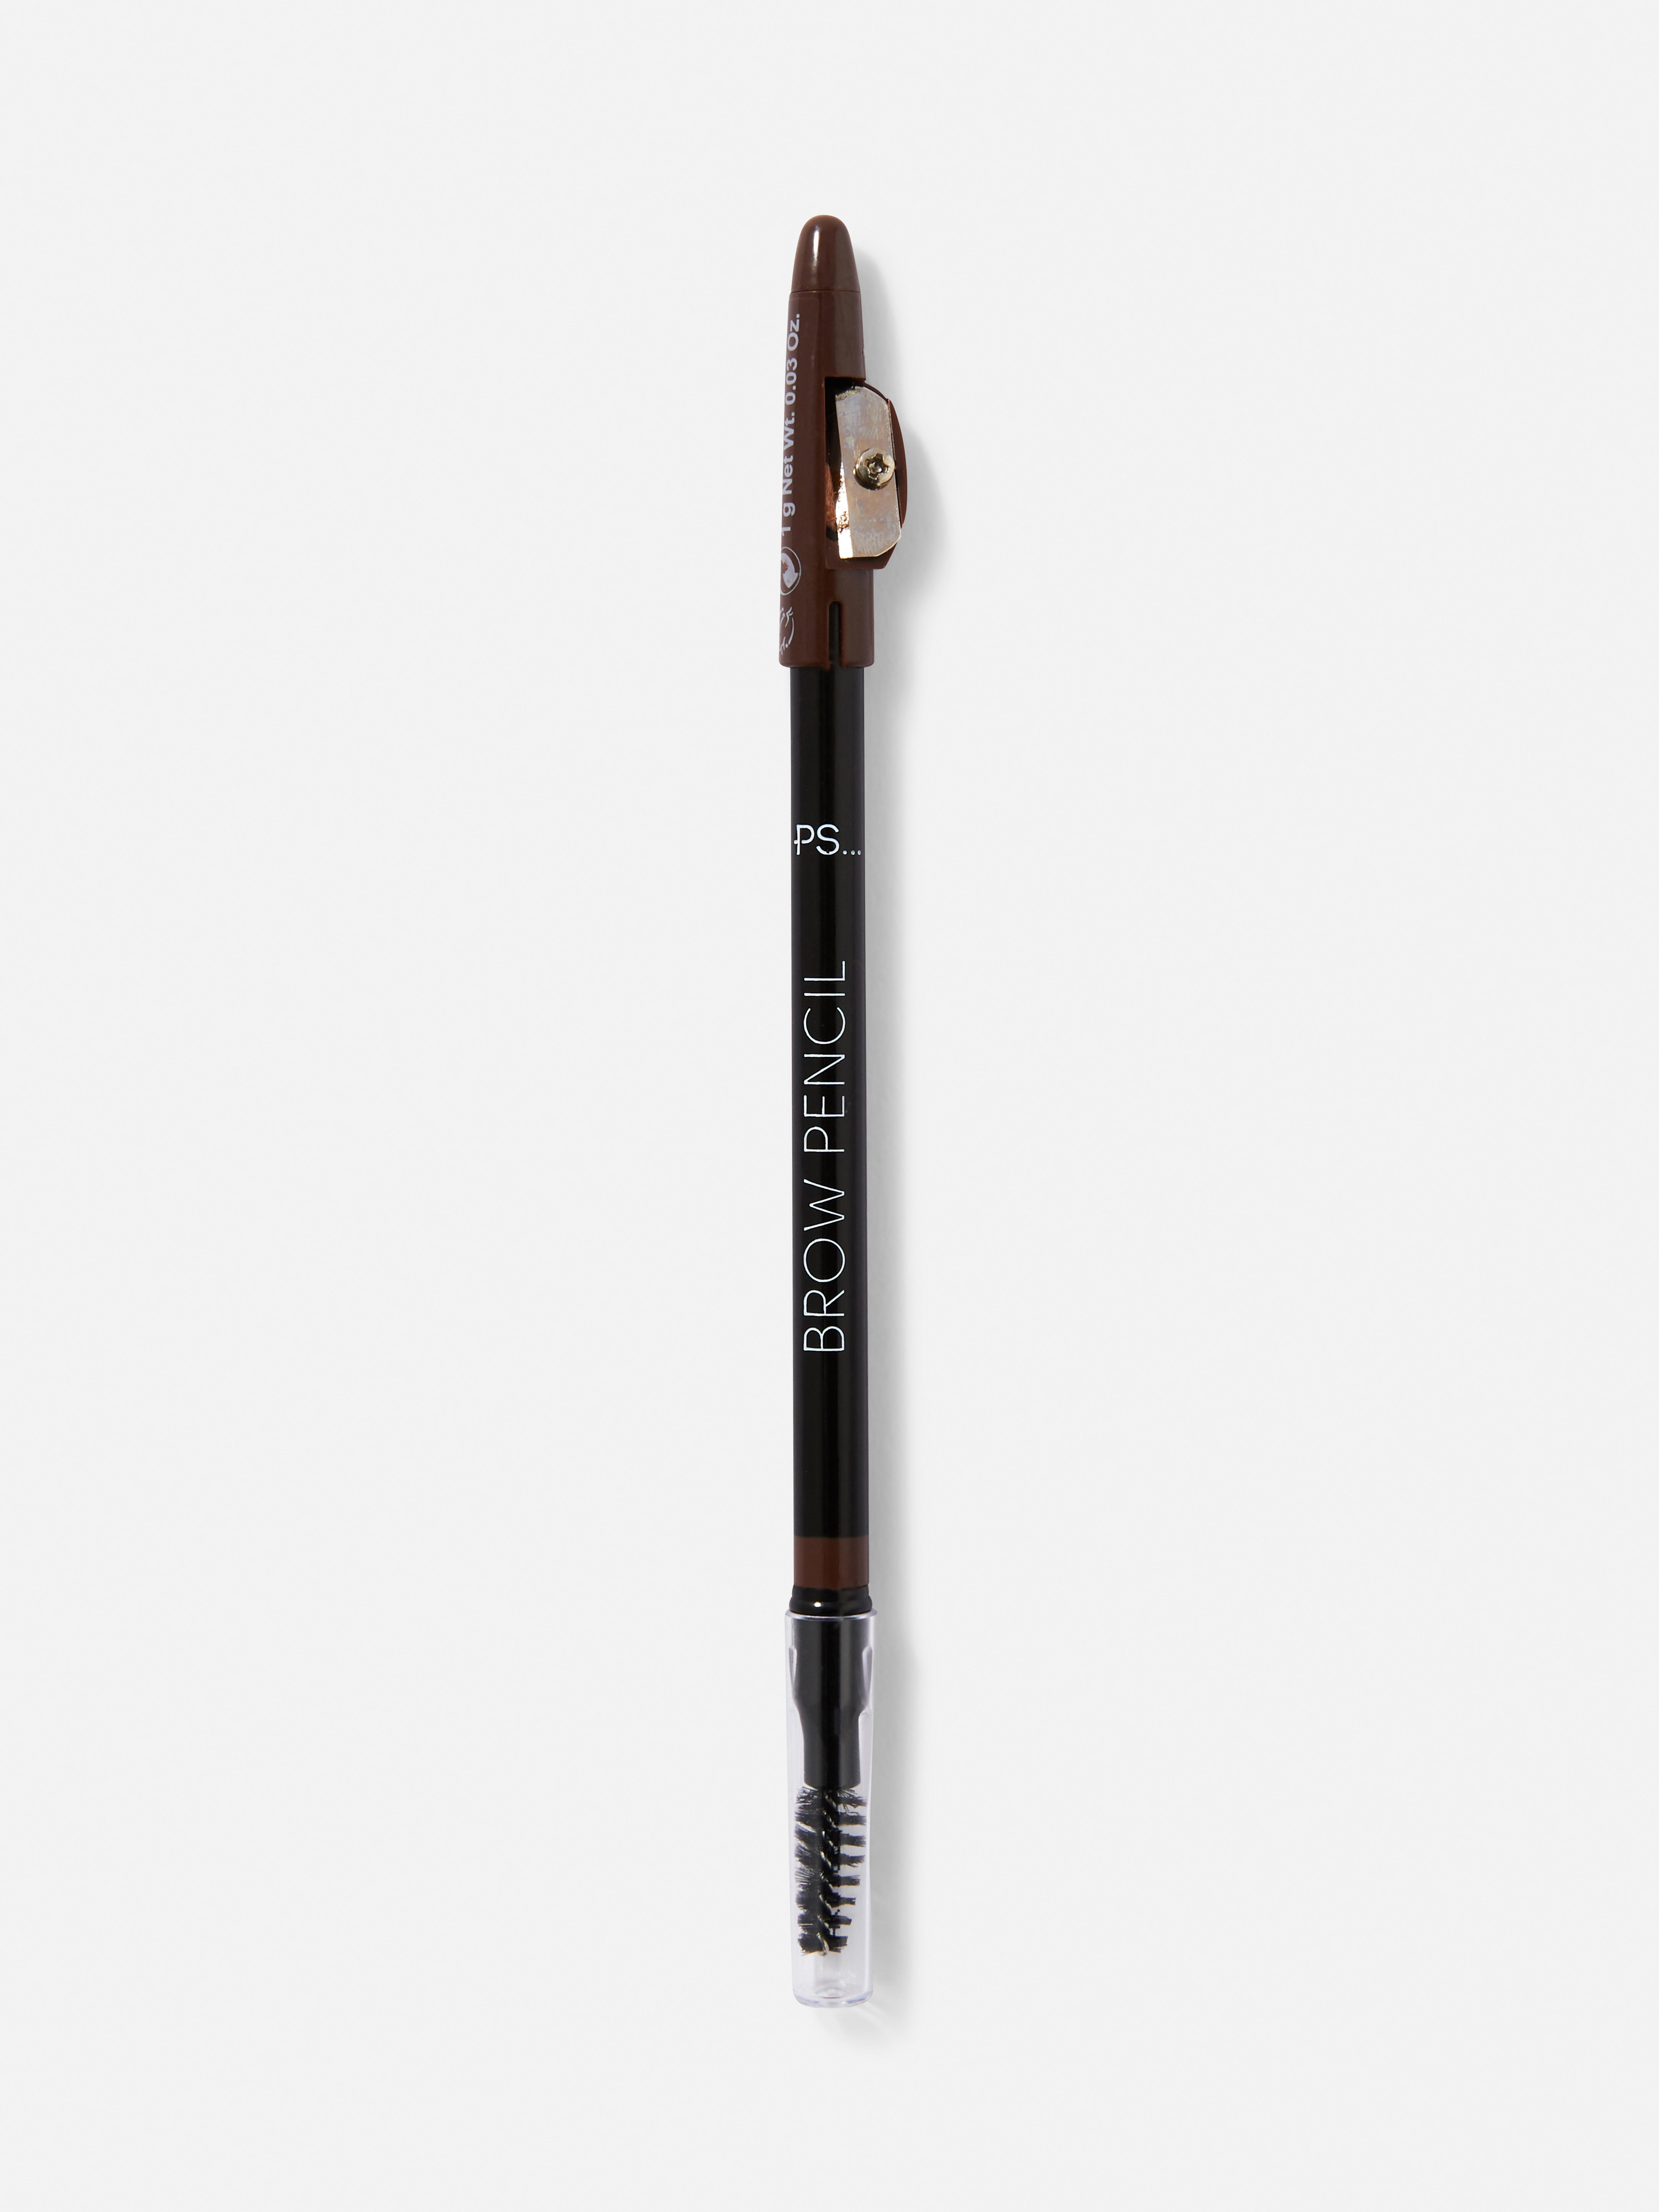 PS Eyebrow Pencil and Sharpener